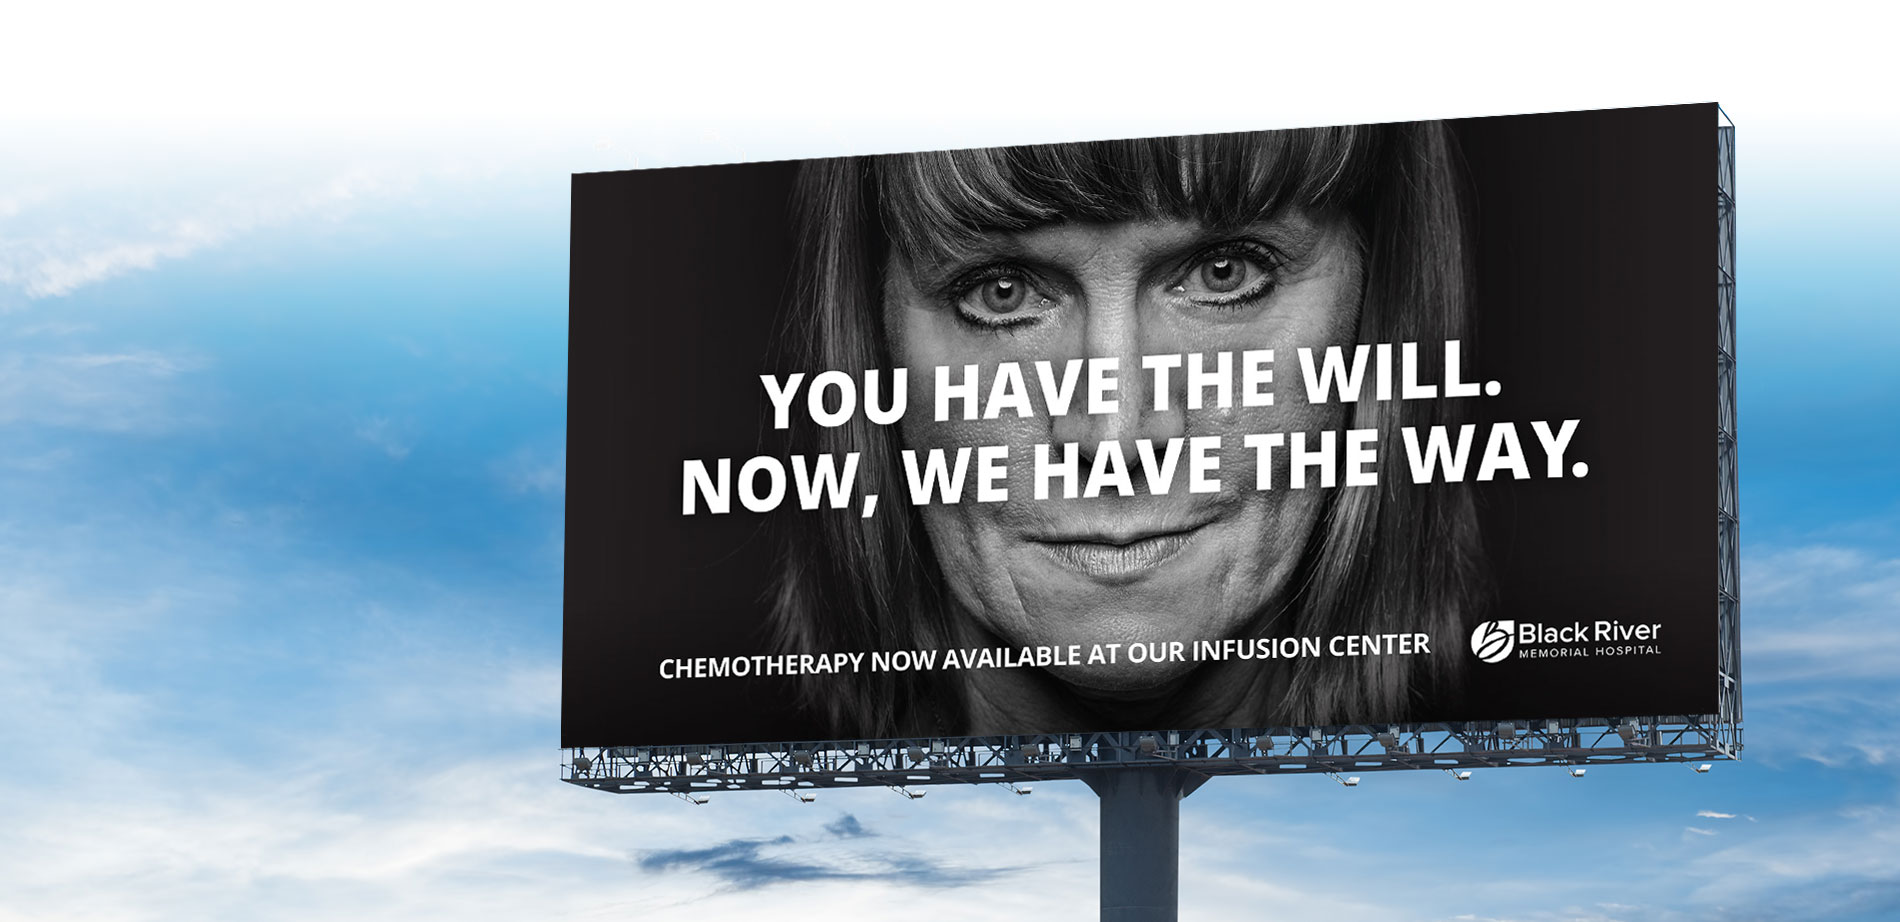 Infusion Center billboard advertisement